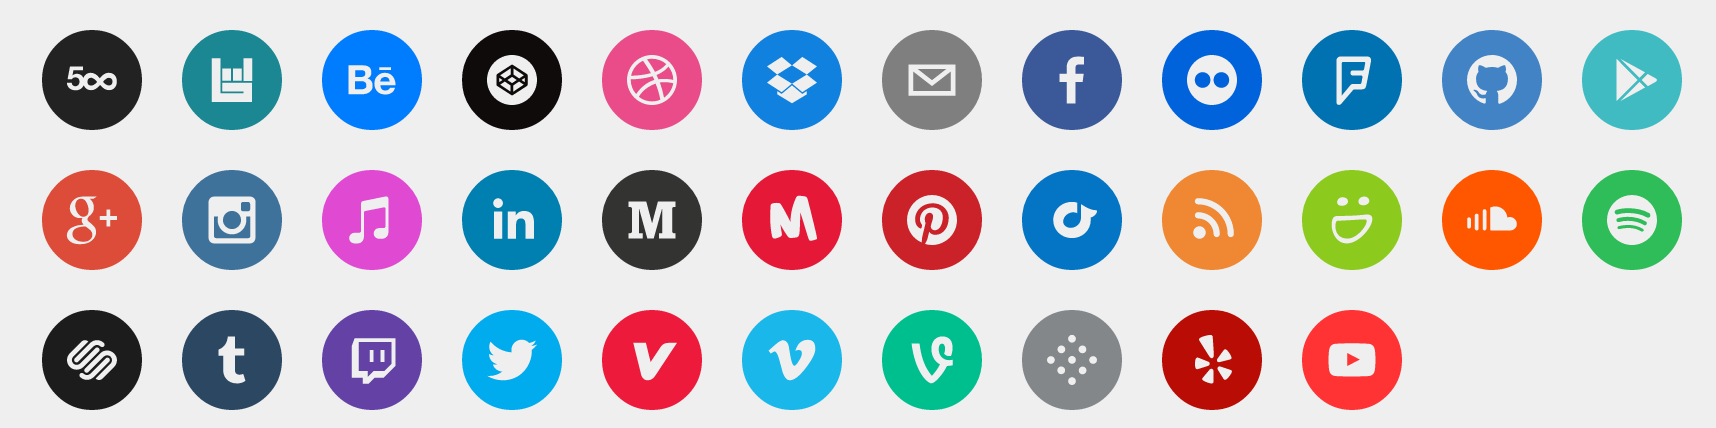 react-social-icons